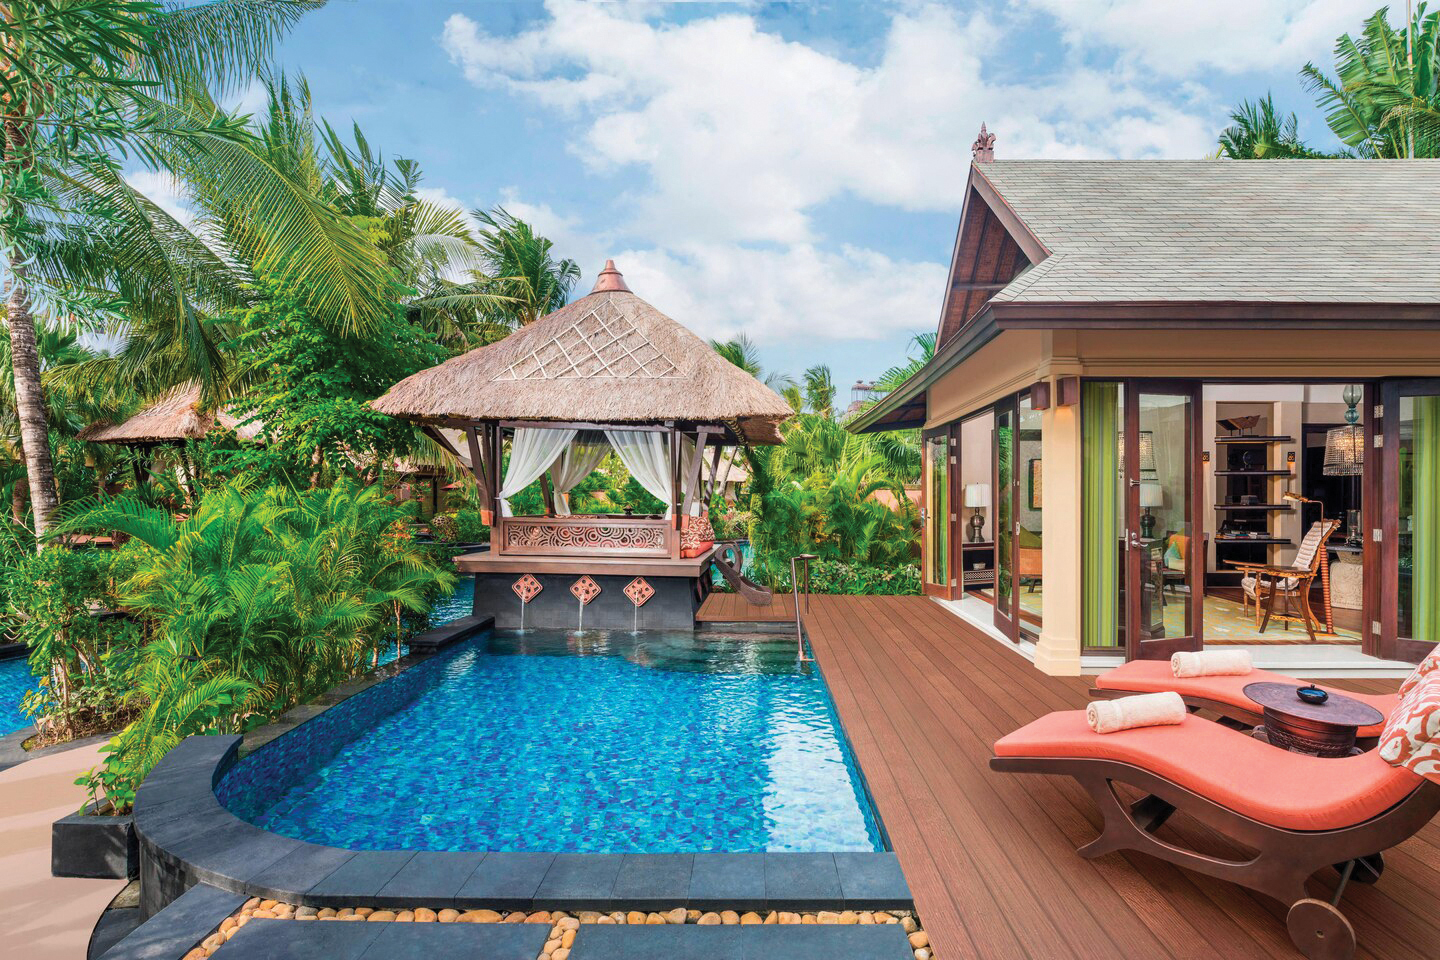 Part of The St. Regis Bali Resort